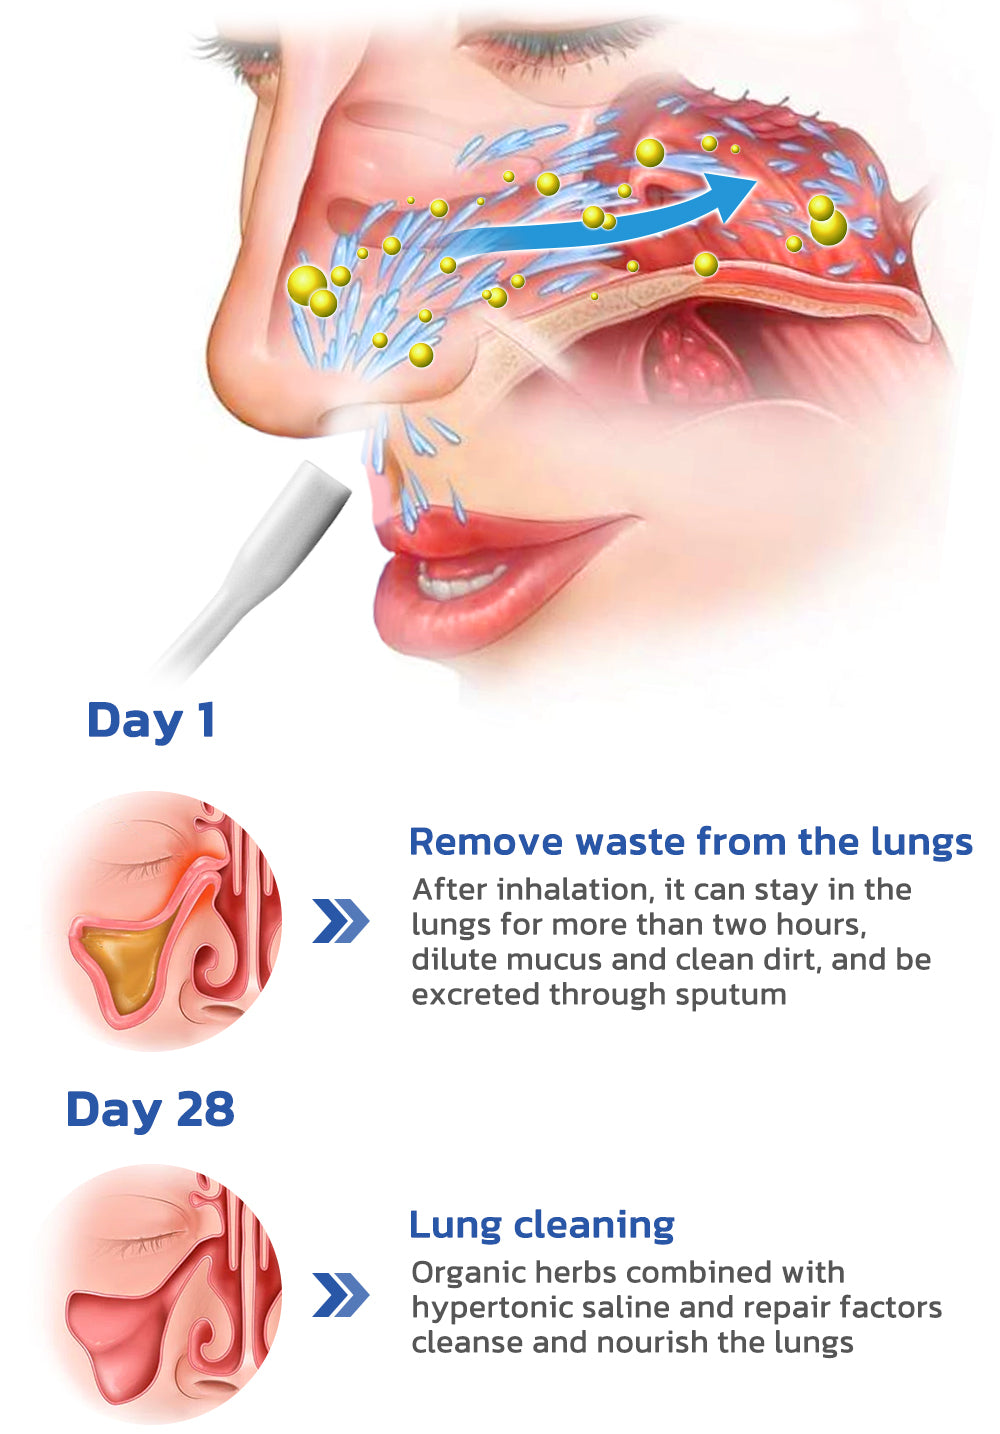 GFOUK™ SeasonsNose Lung Cleaning Nasal Allergic Spray